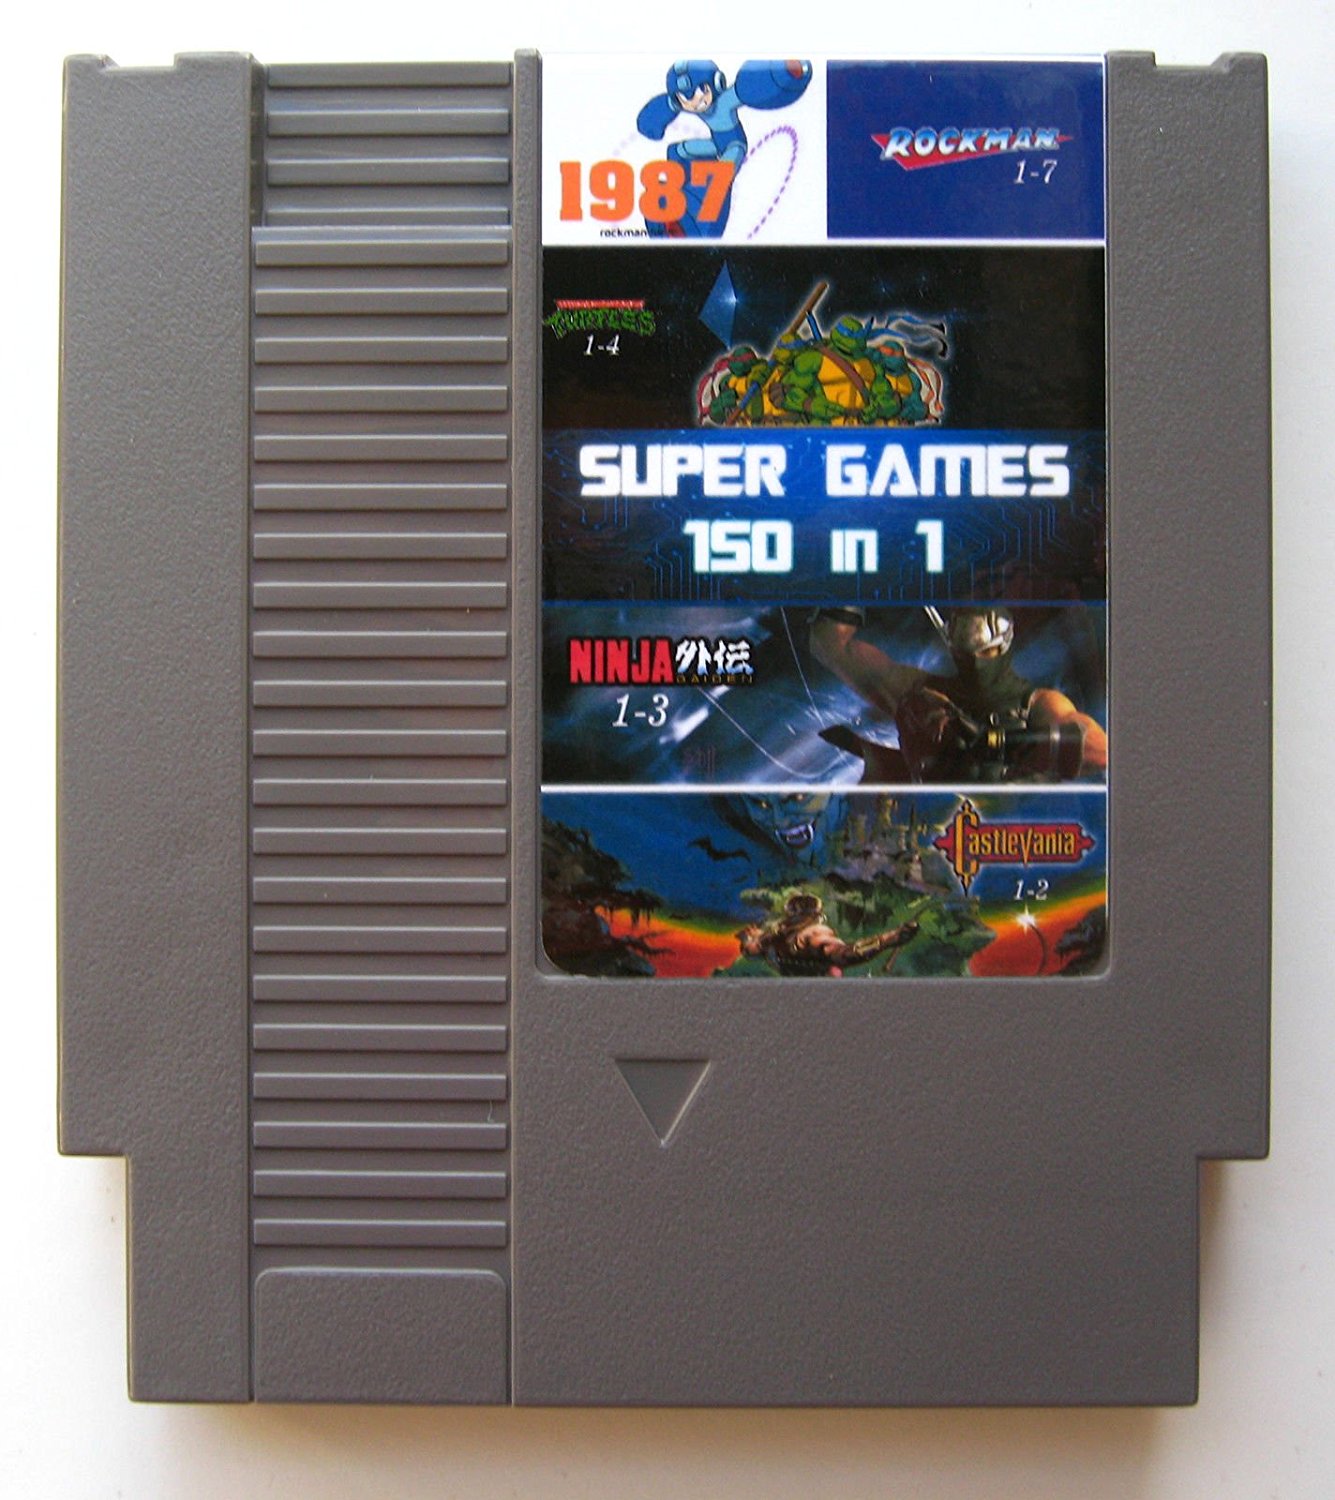 NES 150 in 1 cartridge